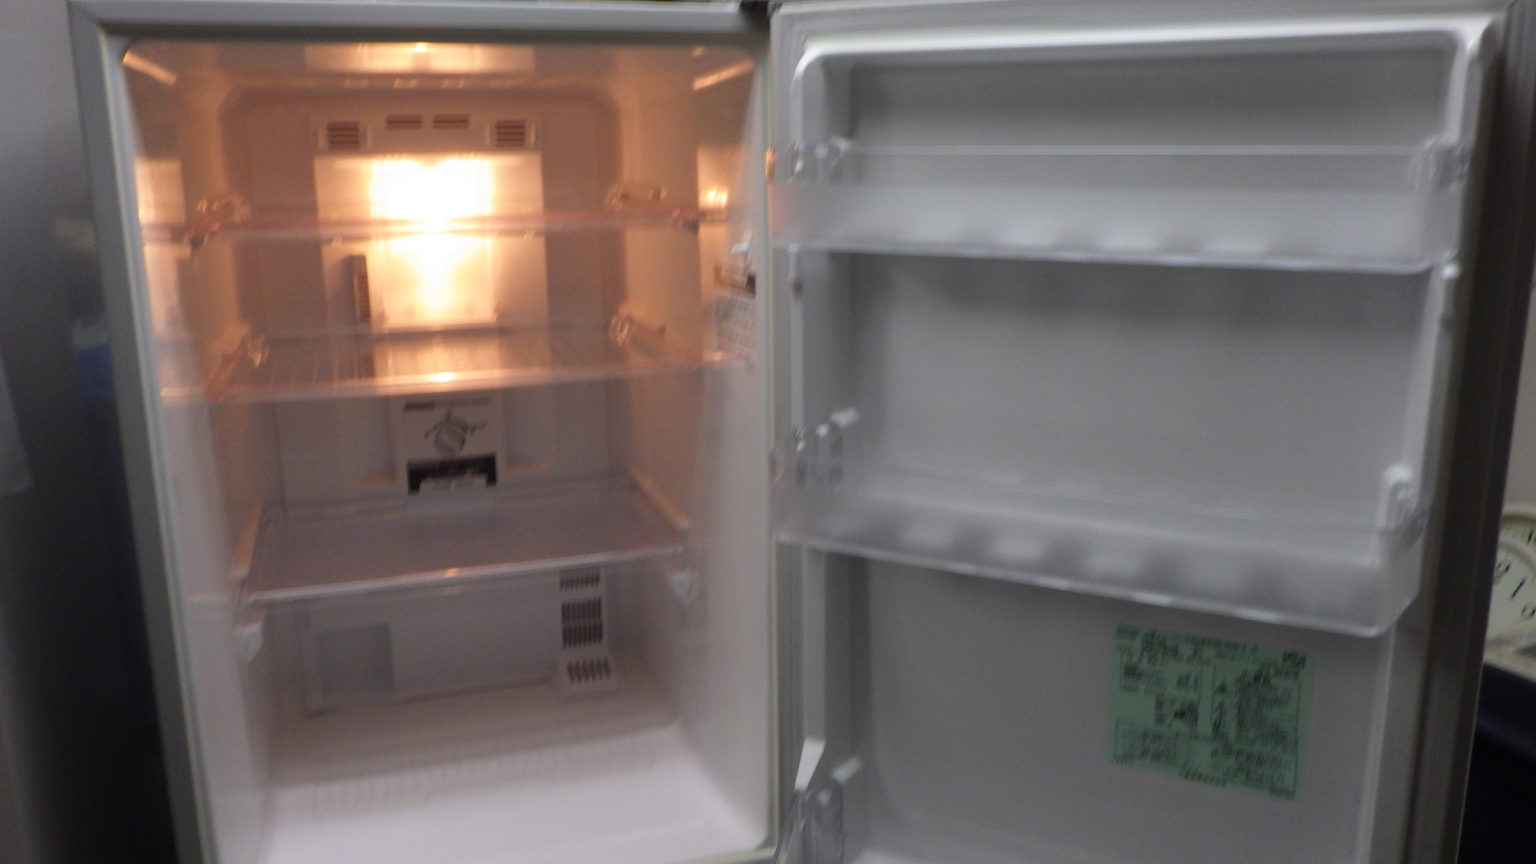 MITSUBISHI 三菱 ノンフロン2ドア冷凍冷蔵庫 ブラック MR-H26S-B 256L 